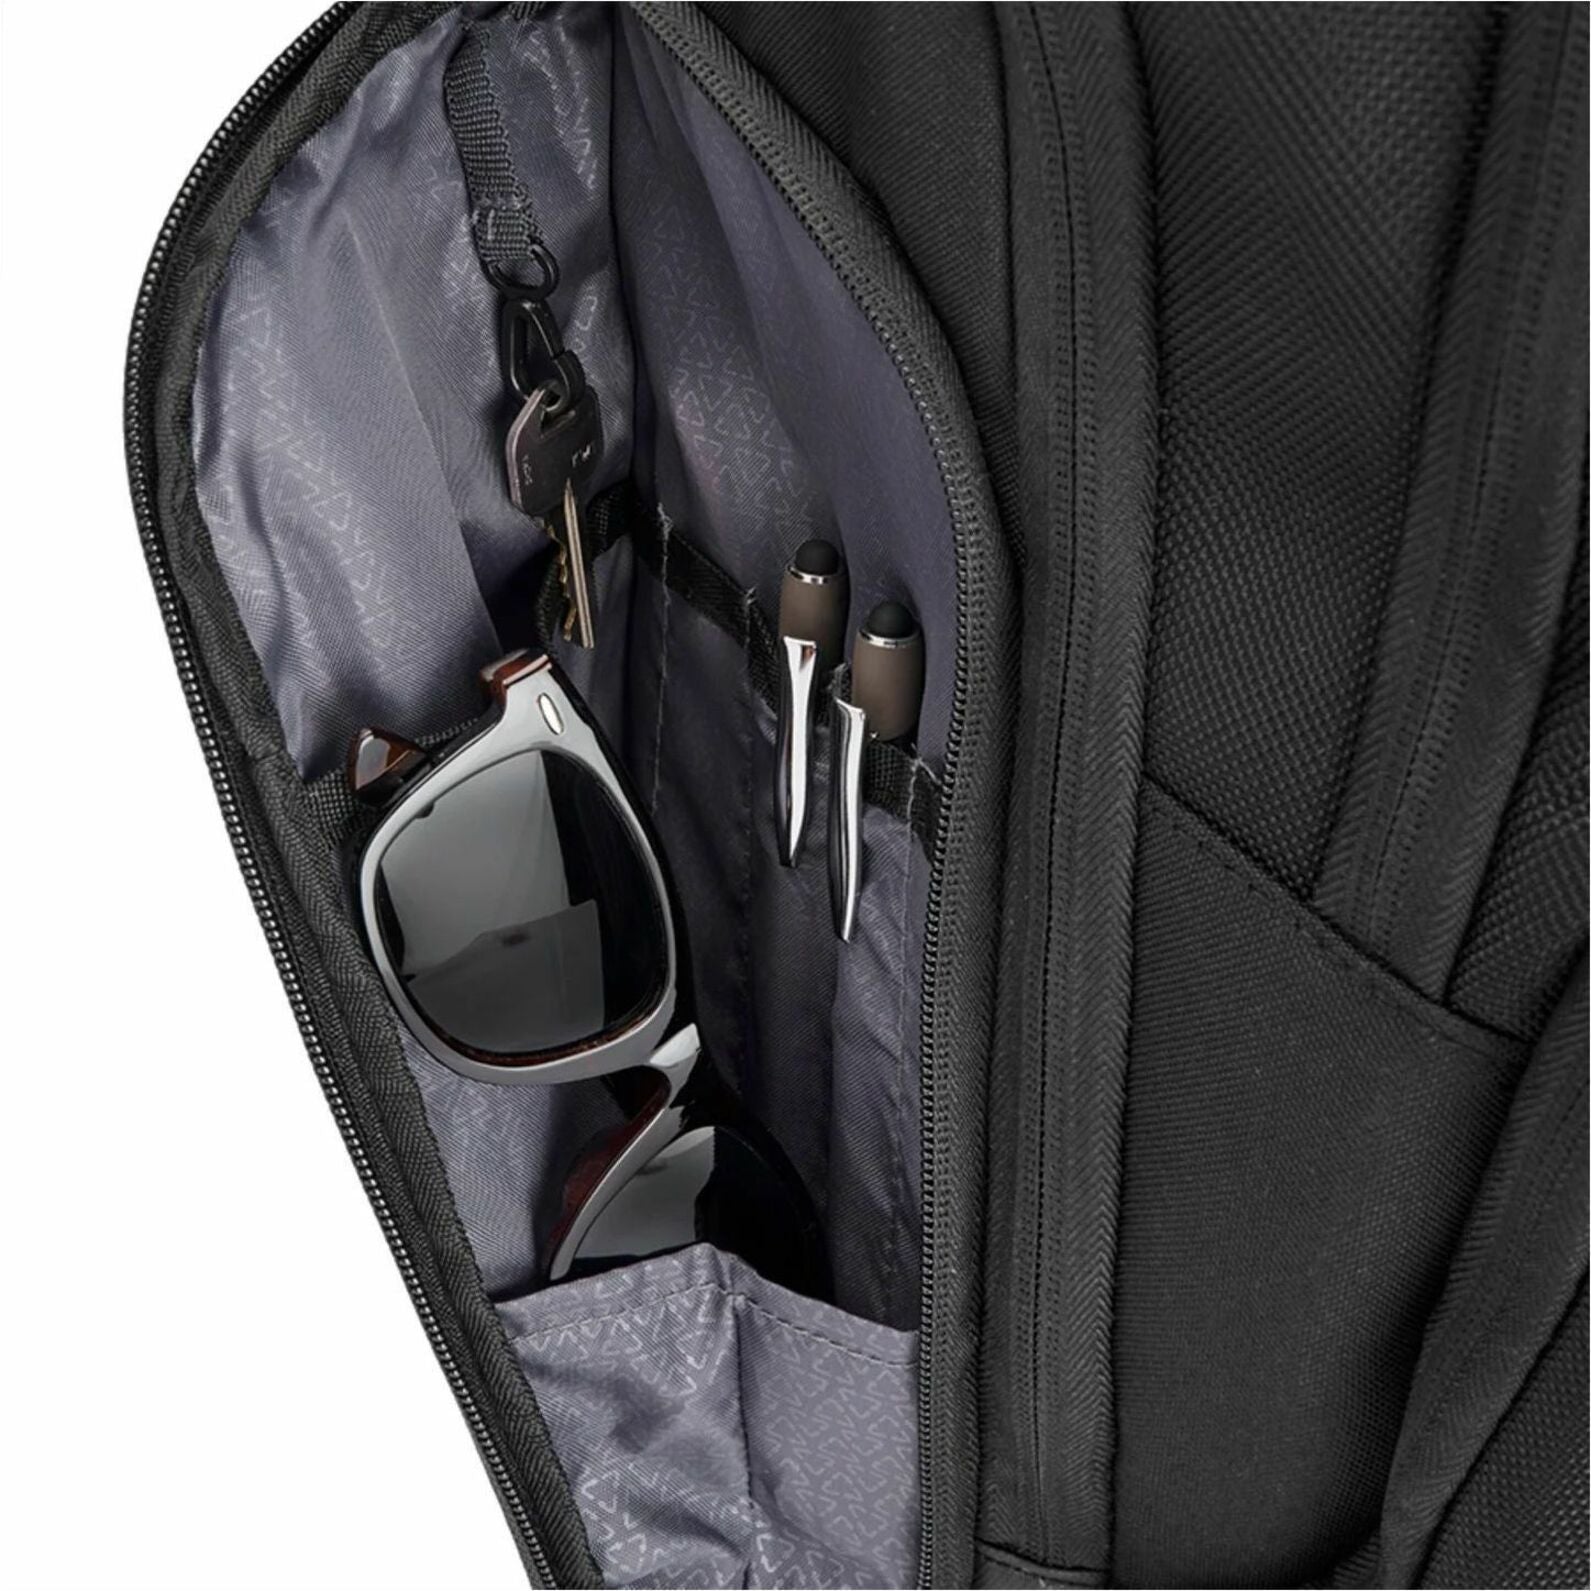 CODi FER706-4 Ferretti Pro Sport Pack 15.6" Laptop Backpack, Black, Zipper, Adjustable Strap, Laptop and Tablet Compartment